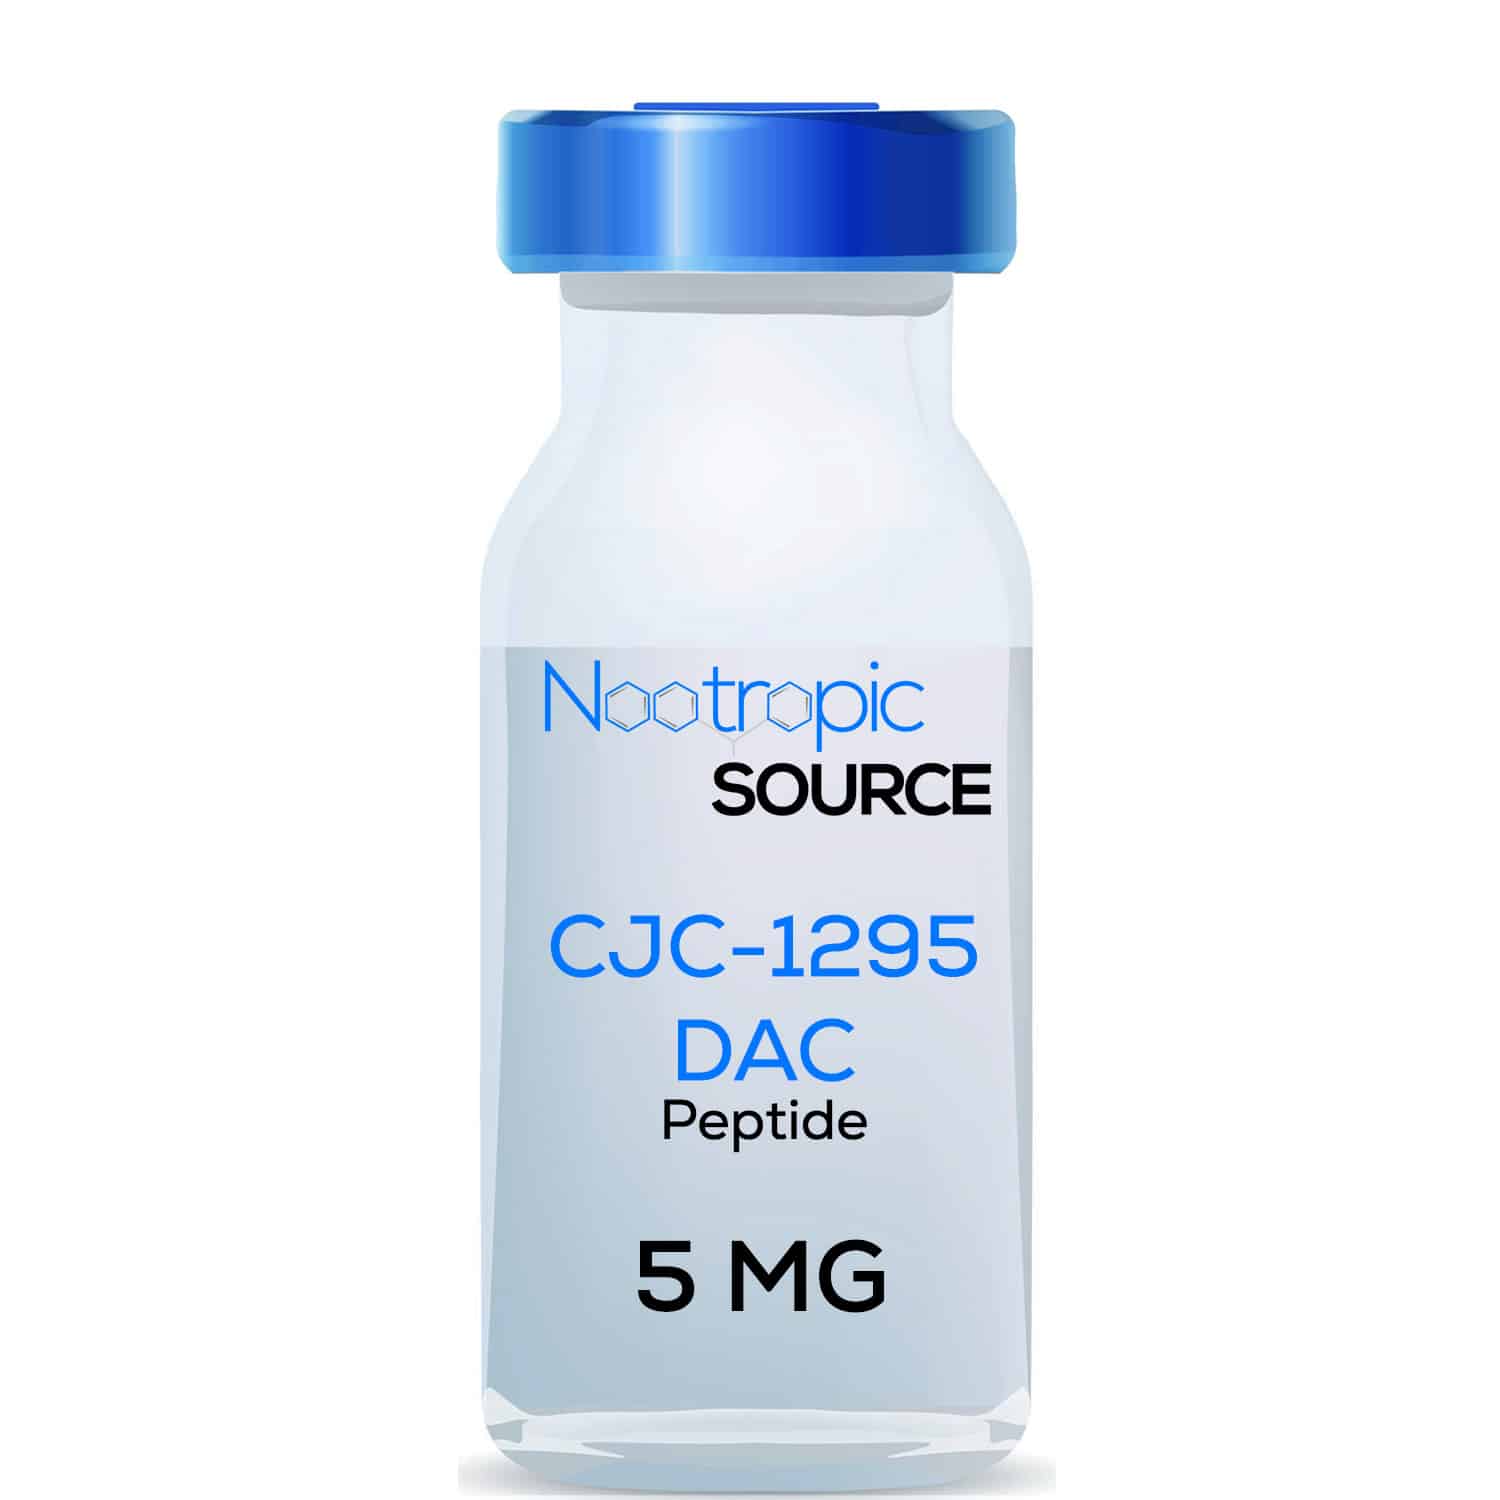 CJC-1295 (with DAC) Peptide